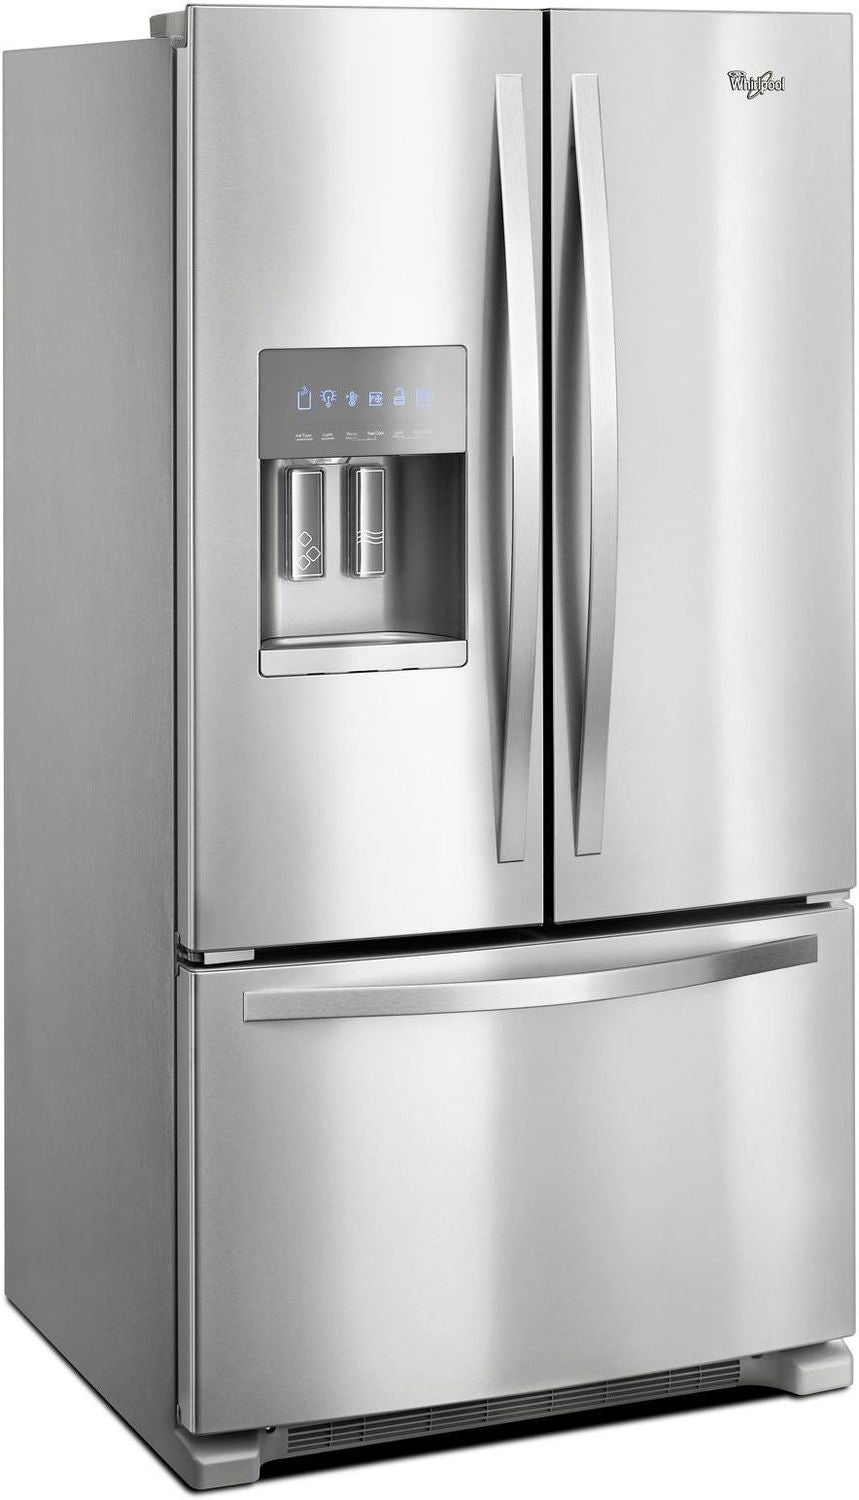 Whirlpool Stainless Steel French Door Refrigerator (25 Cu. Ft.) - WRF555SDFZ